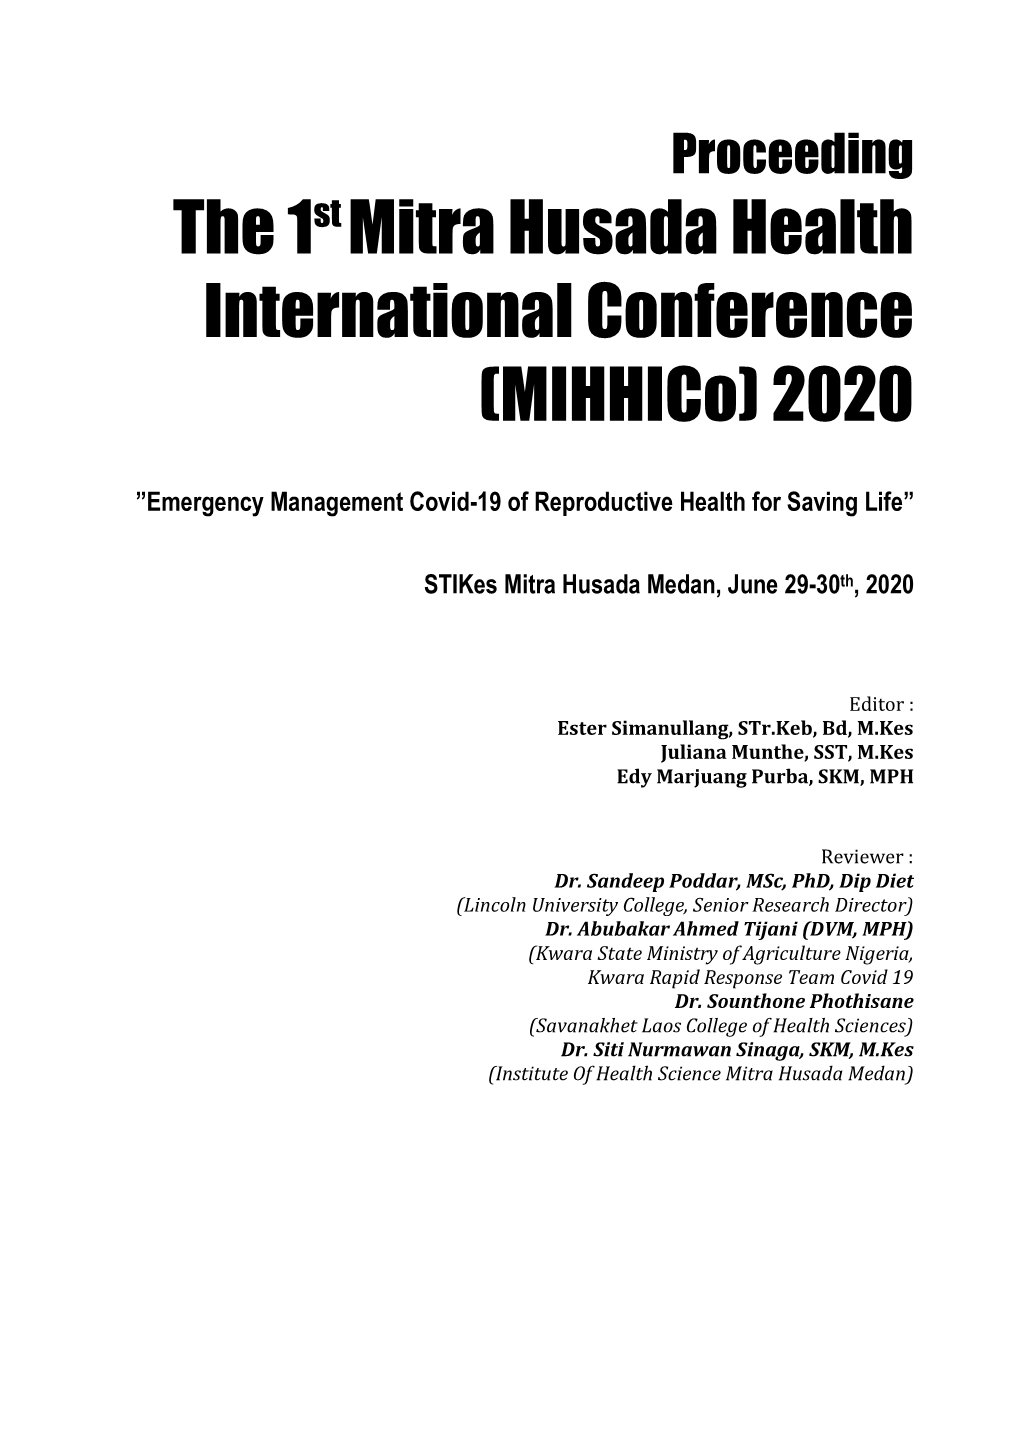 The 1St Mitra Husada Health International Conference (Mihhico) 2020